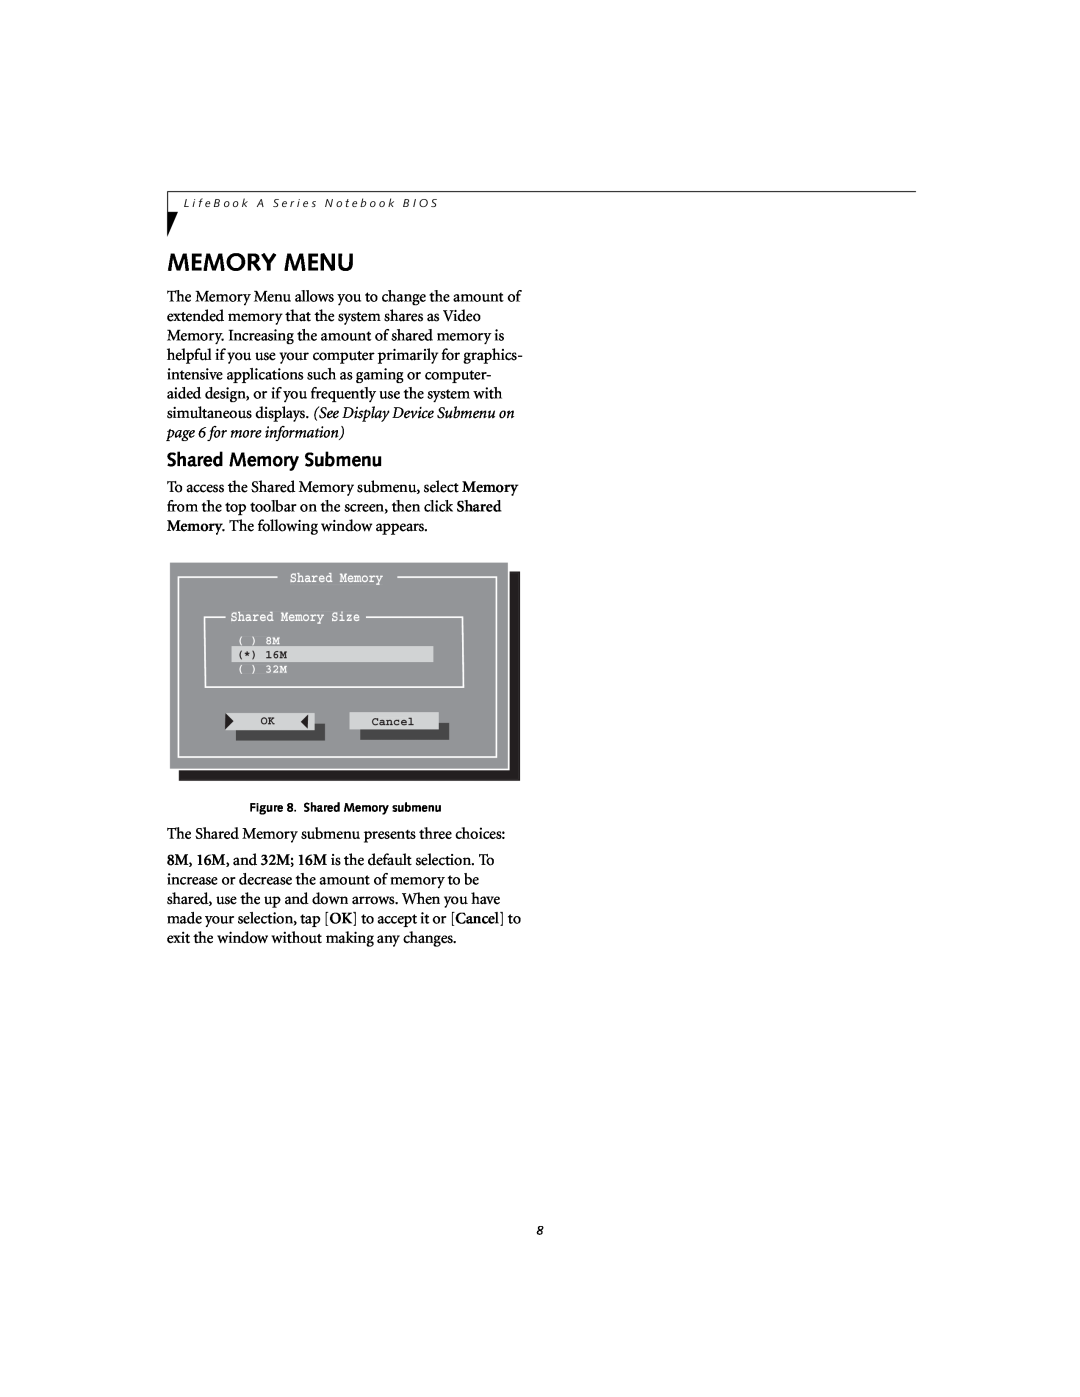 Fujitsu A1010 manual Memory Menu, Shared Memory Submenu 